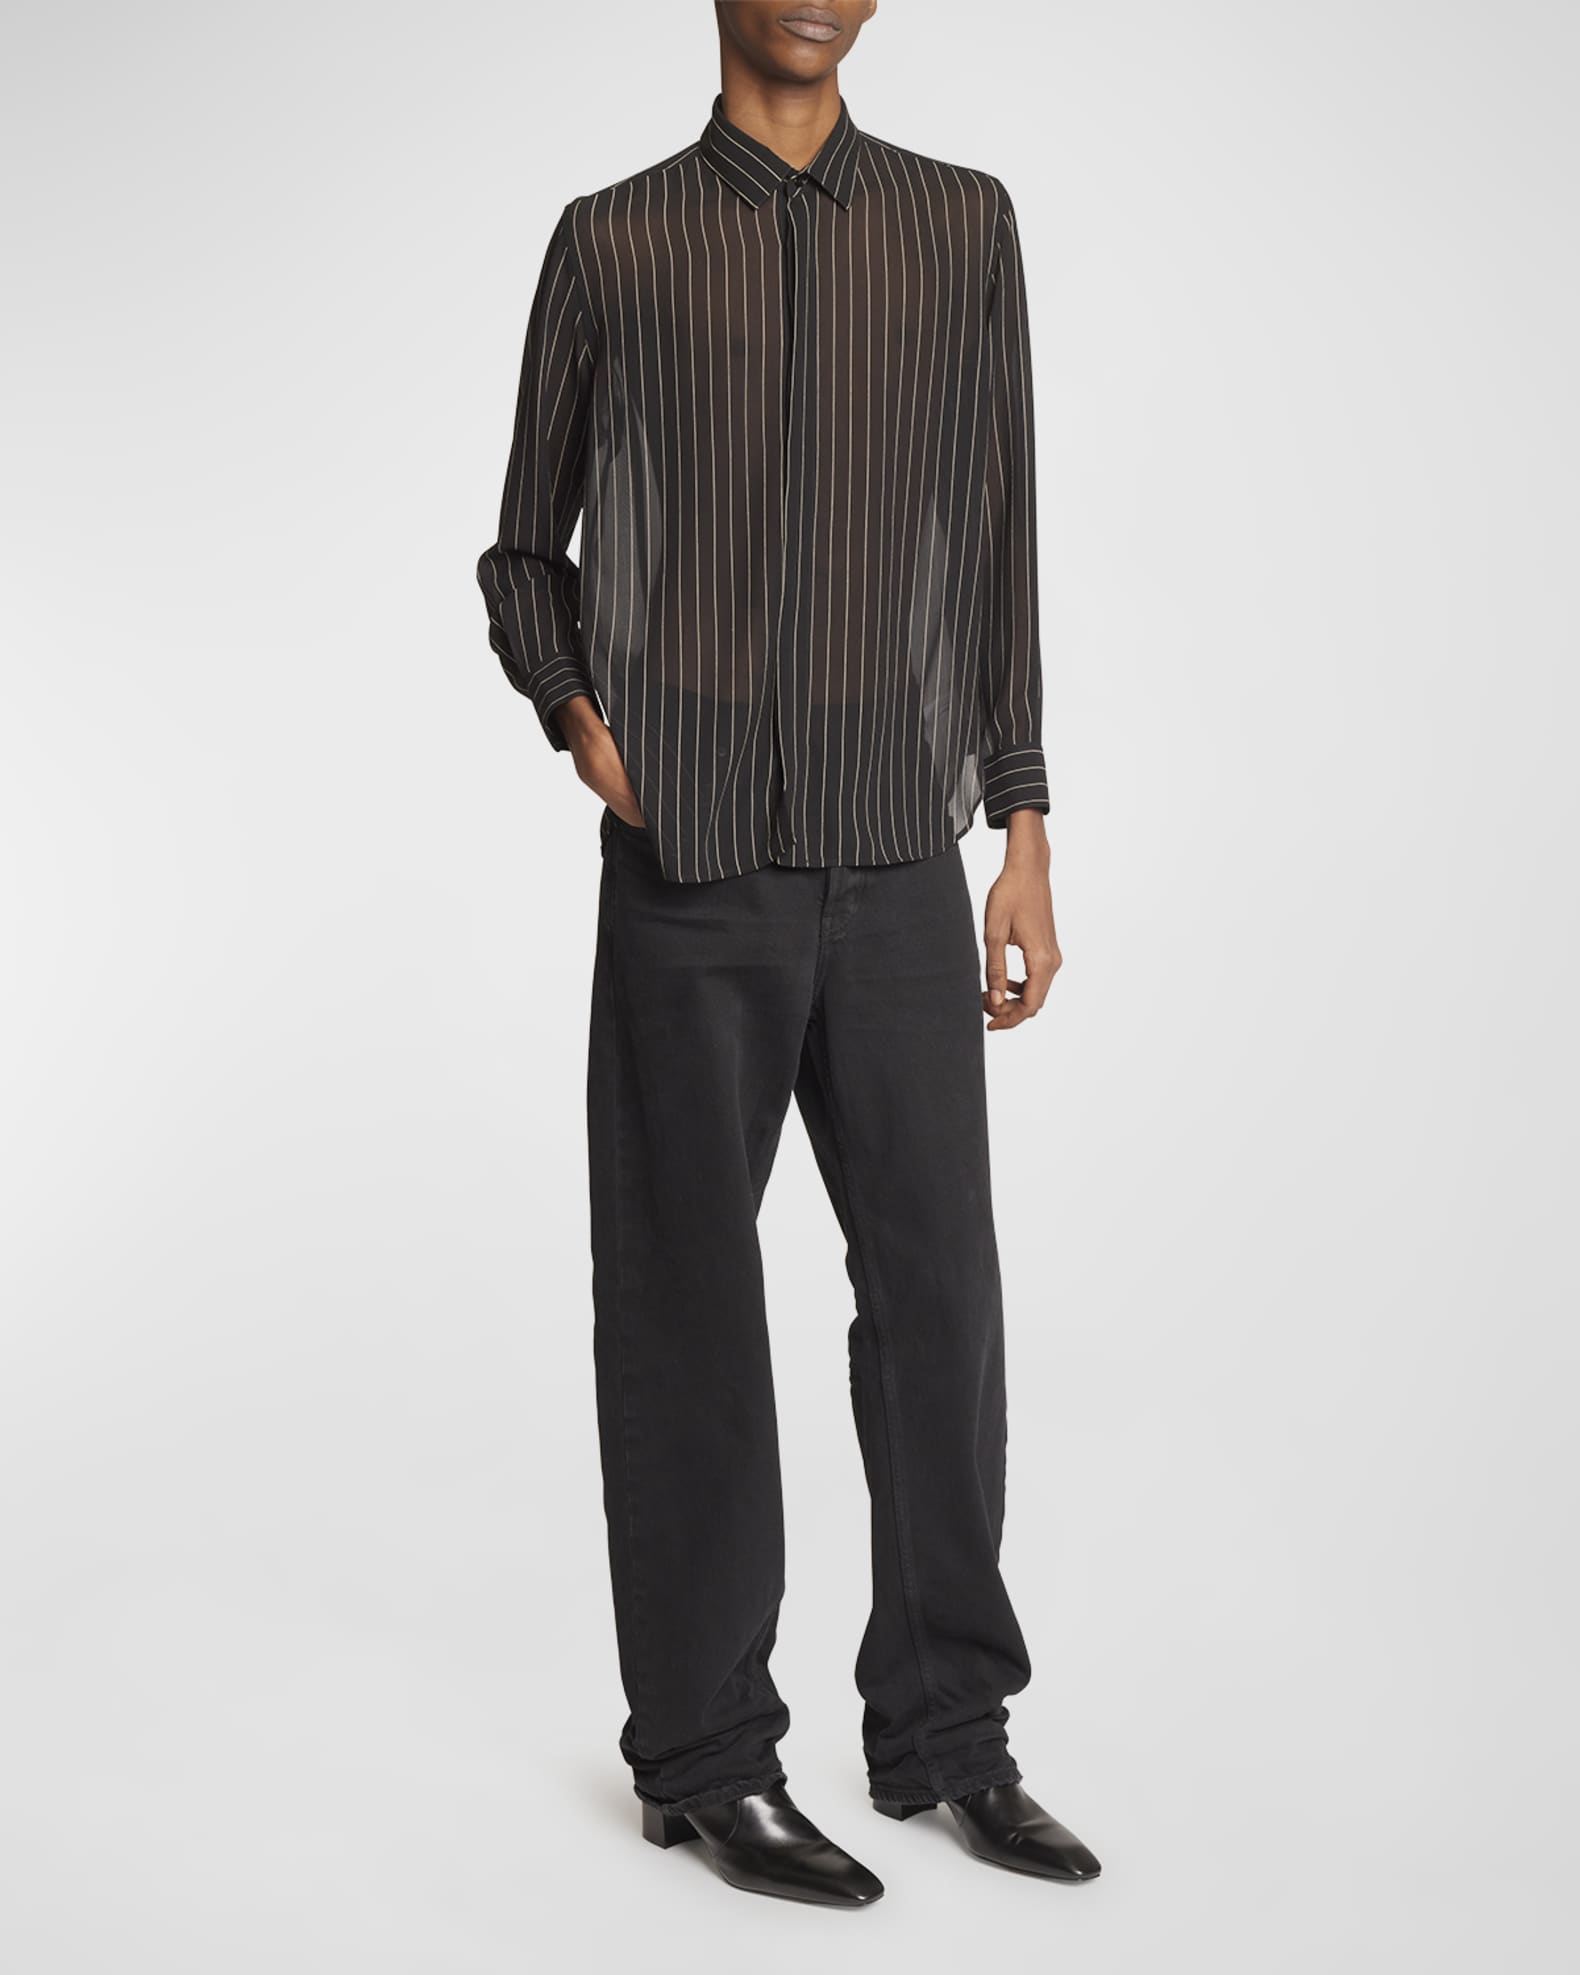 Saint Laurent Men's Yves Striped Georgette Dress Shirt